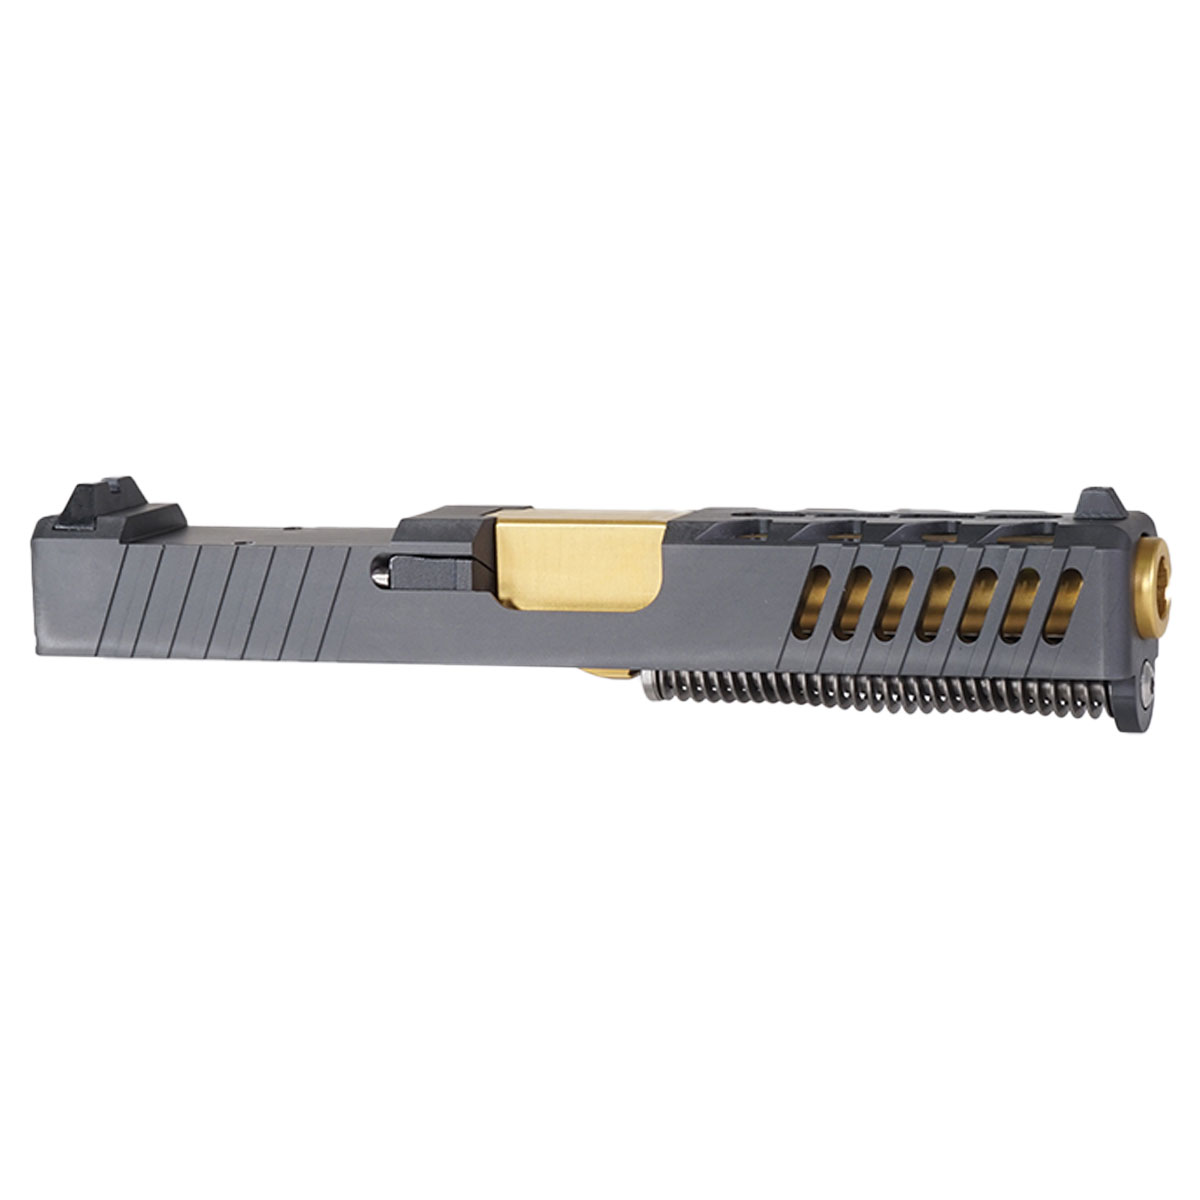 MMC 'Industrialist Revolution' 9mm Complete Slide Kit - Glock 19 Gen 1-3 Compatible